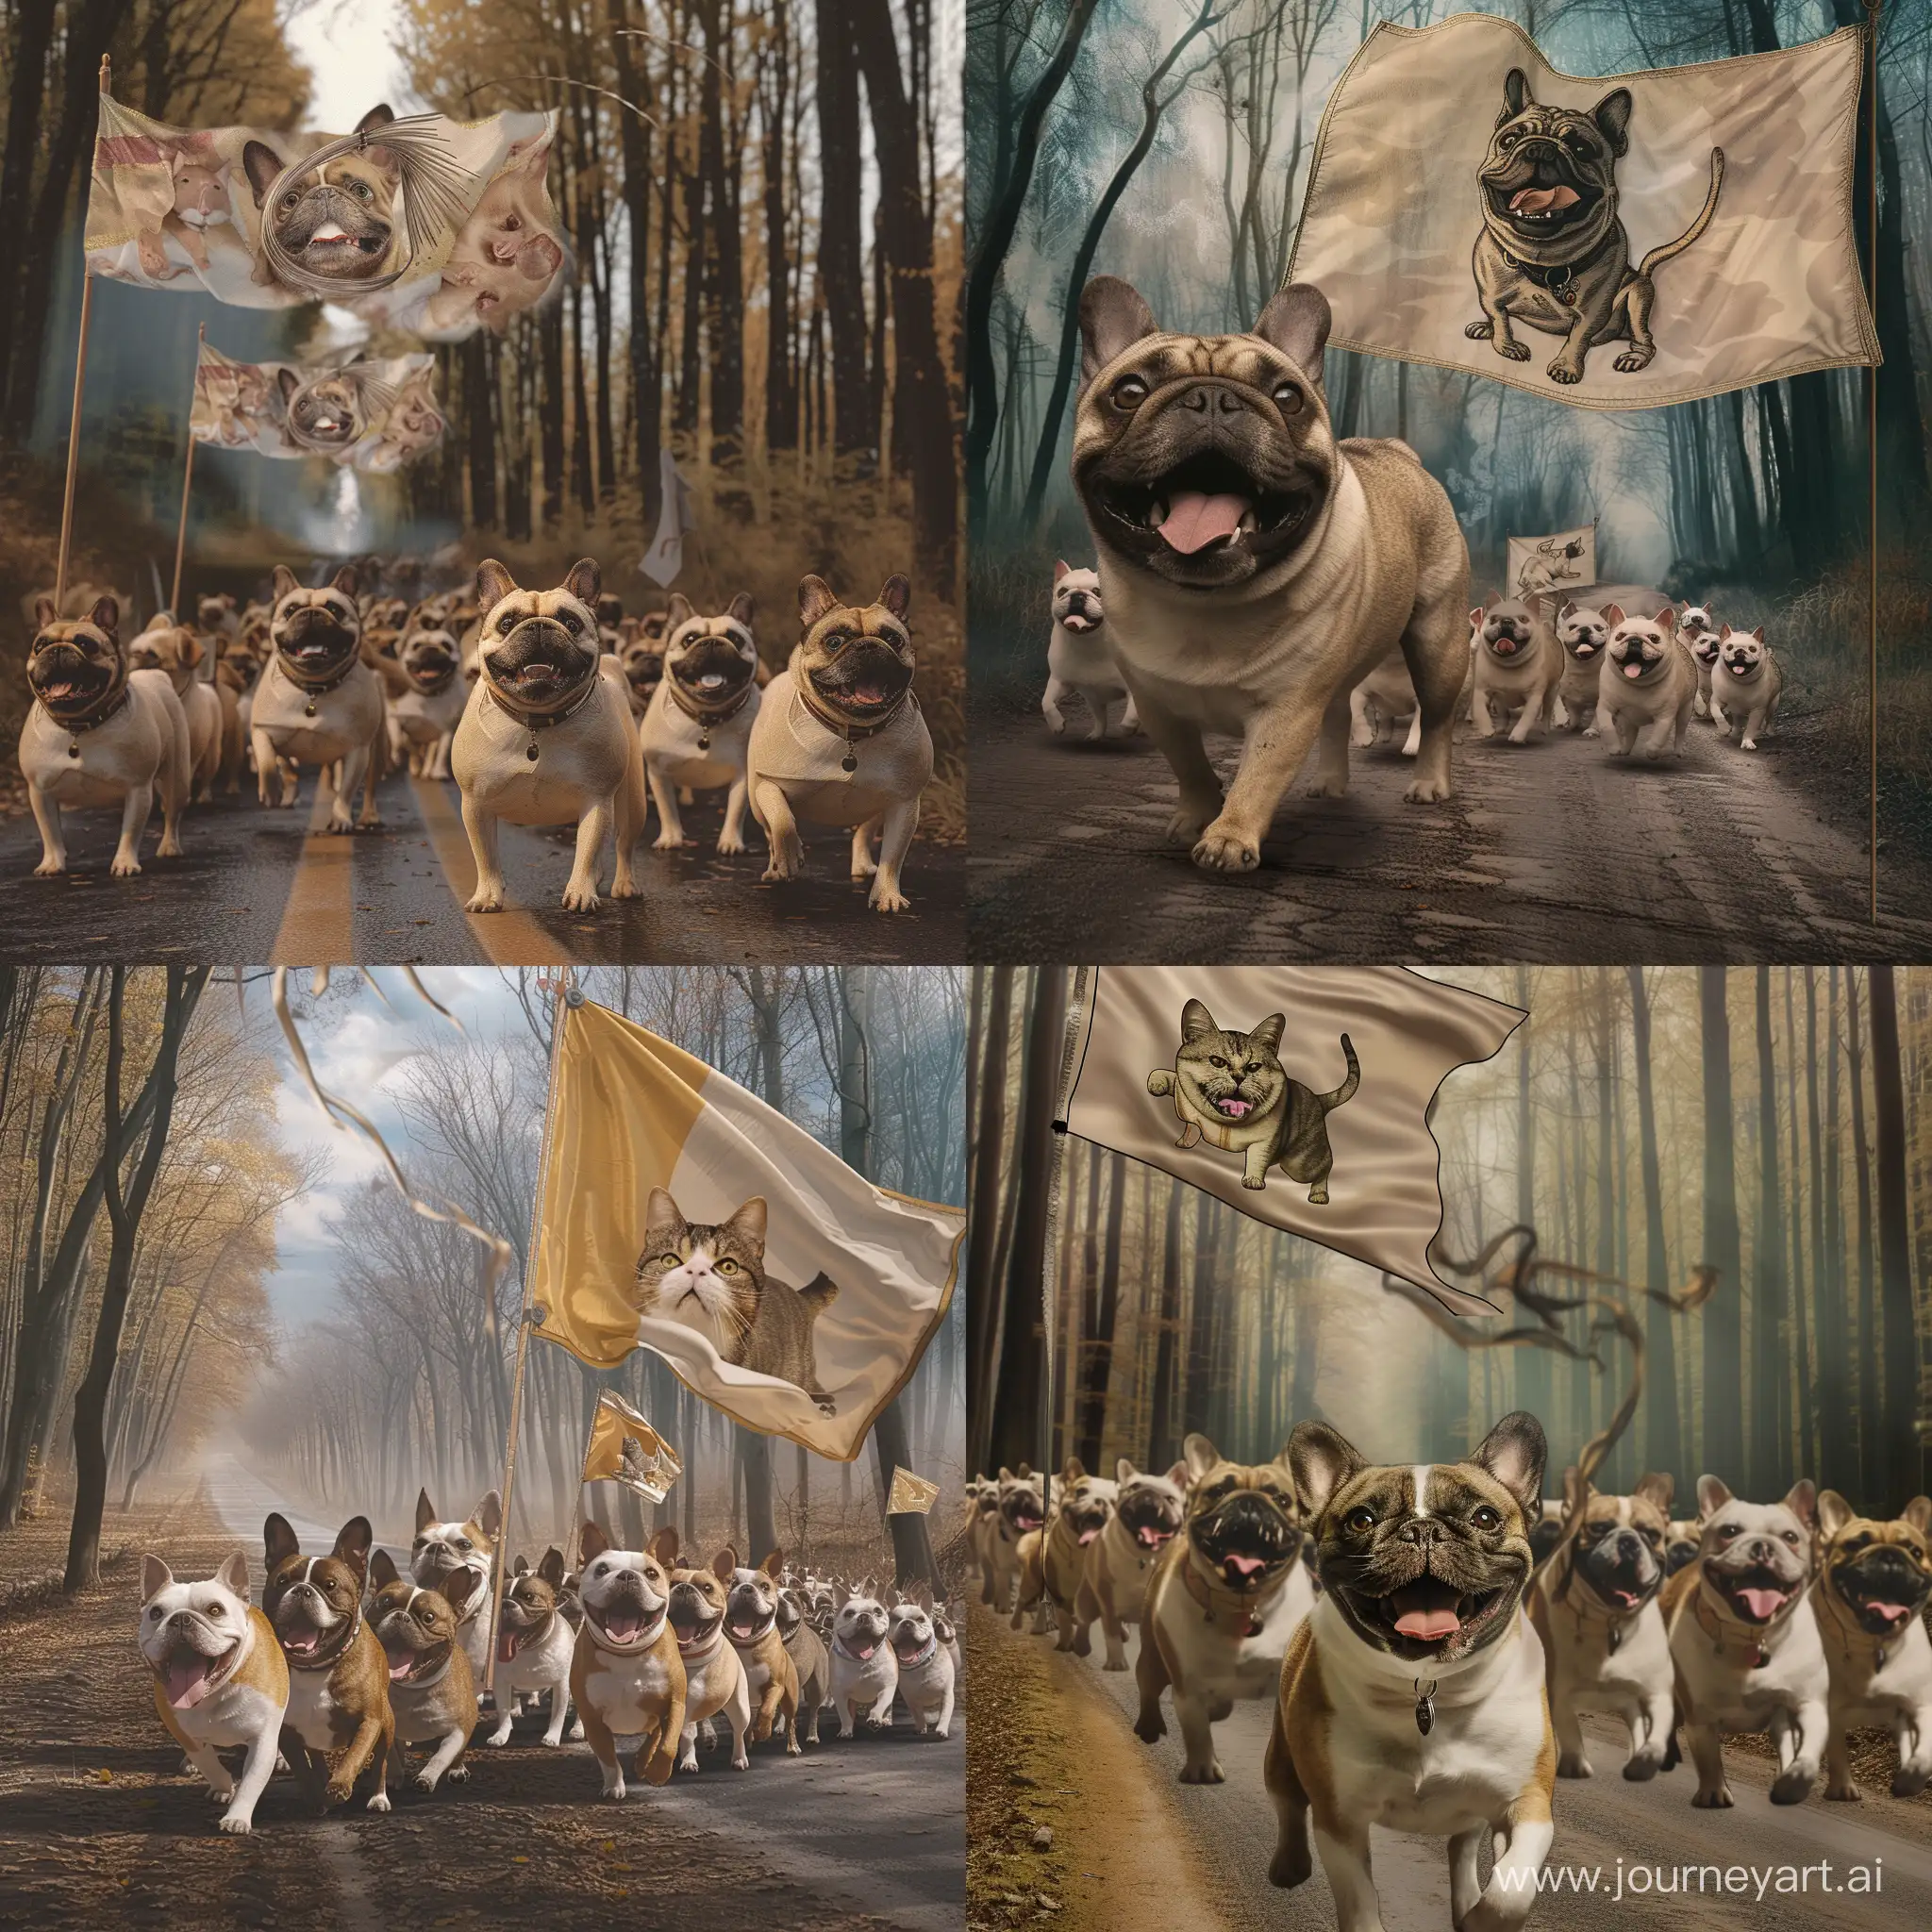 Joyful-French-Bulldog-Army-Parading-in-Woods-with-Cat-Heraldic-Flag